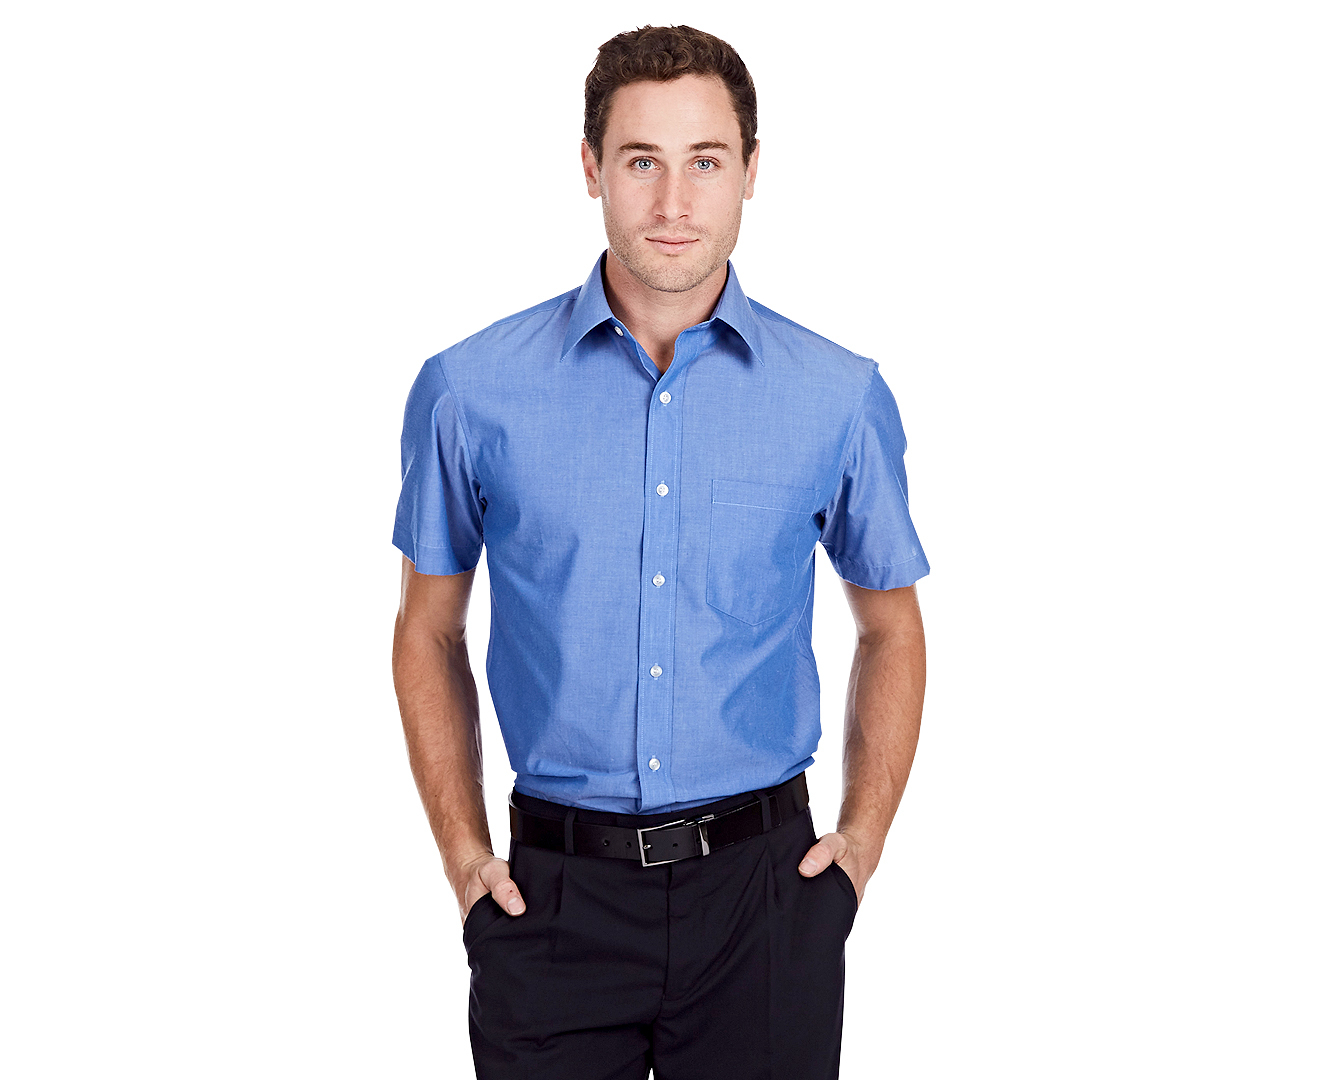 Stylecorp Men's Short Sleeve Shirt - Chambray